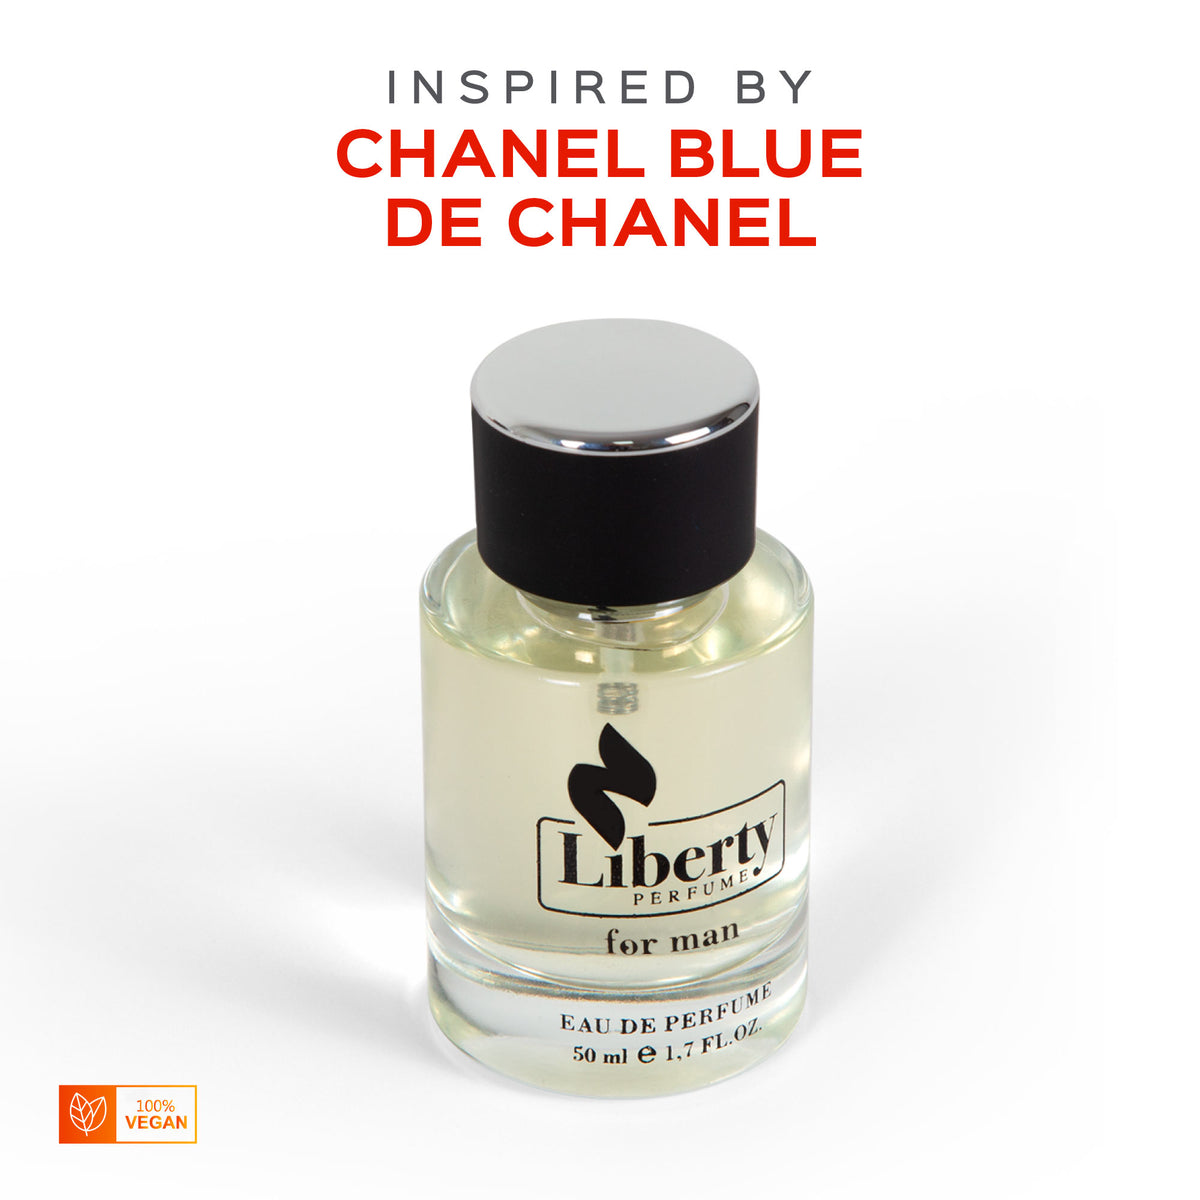 Chanel Bleu de Chanel perfume Alternative for men - composition